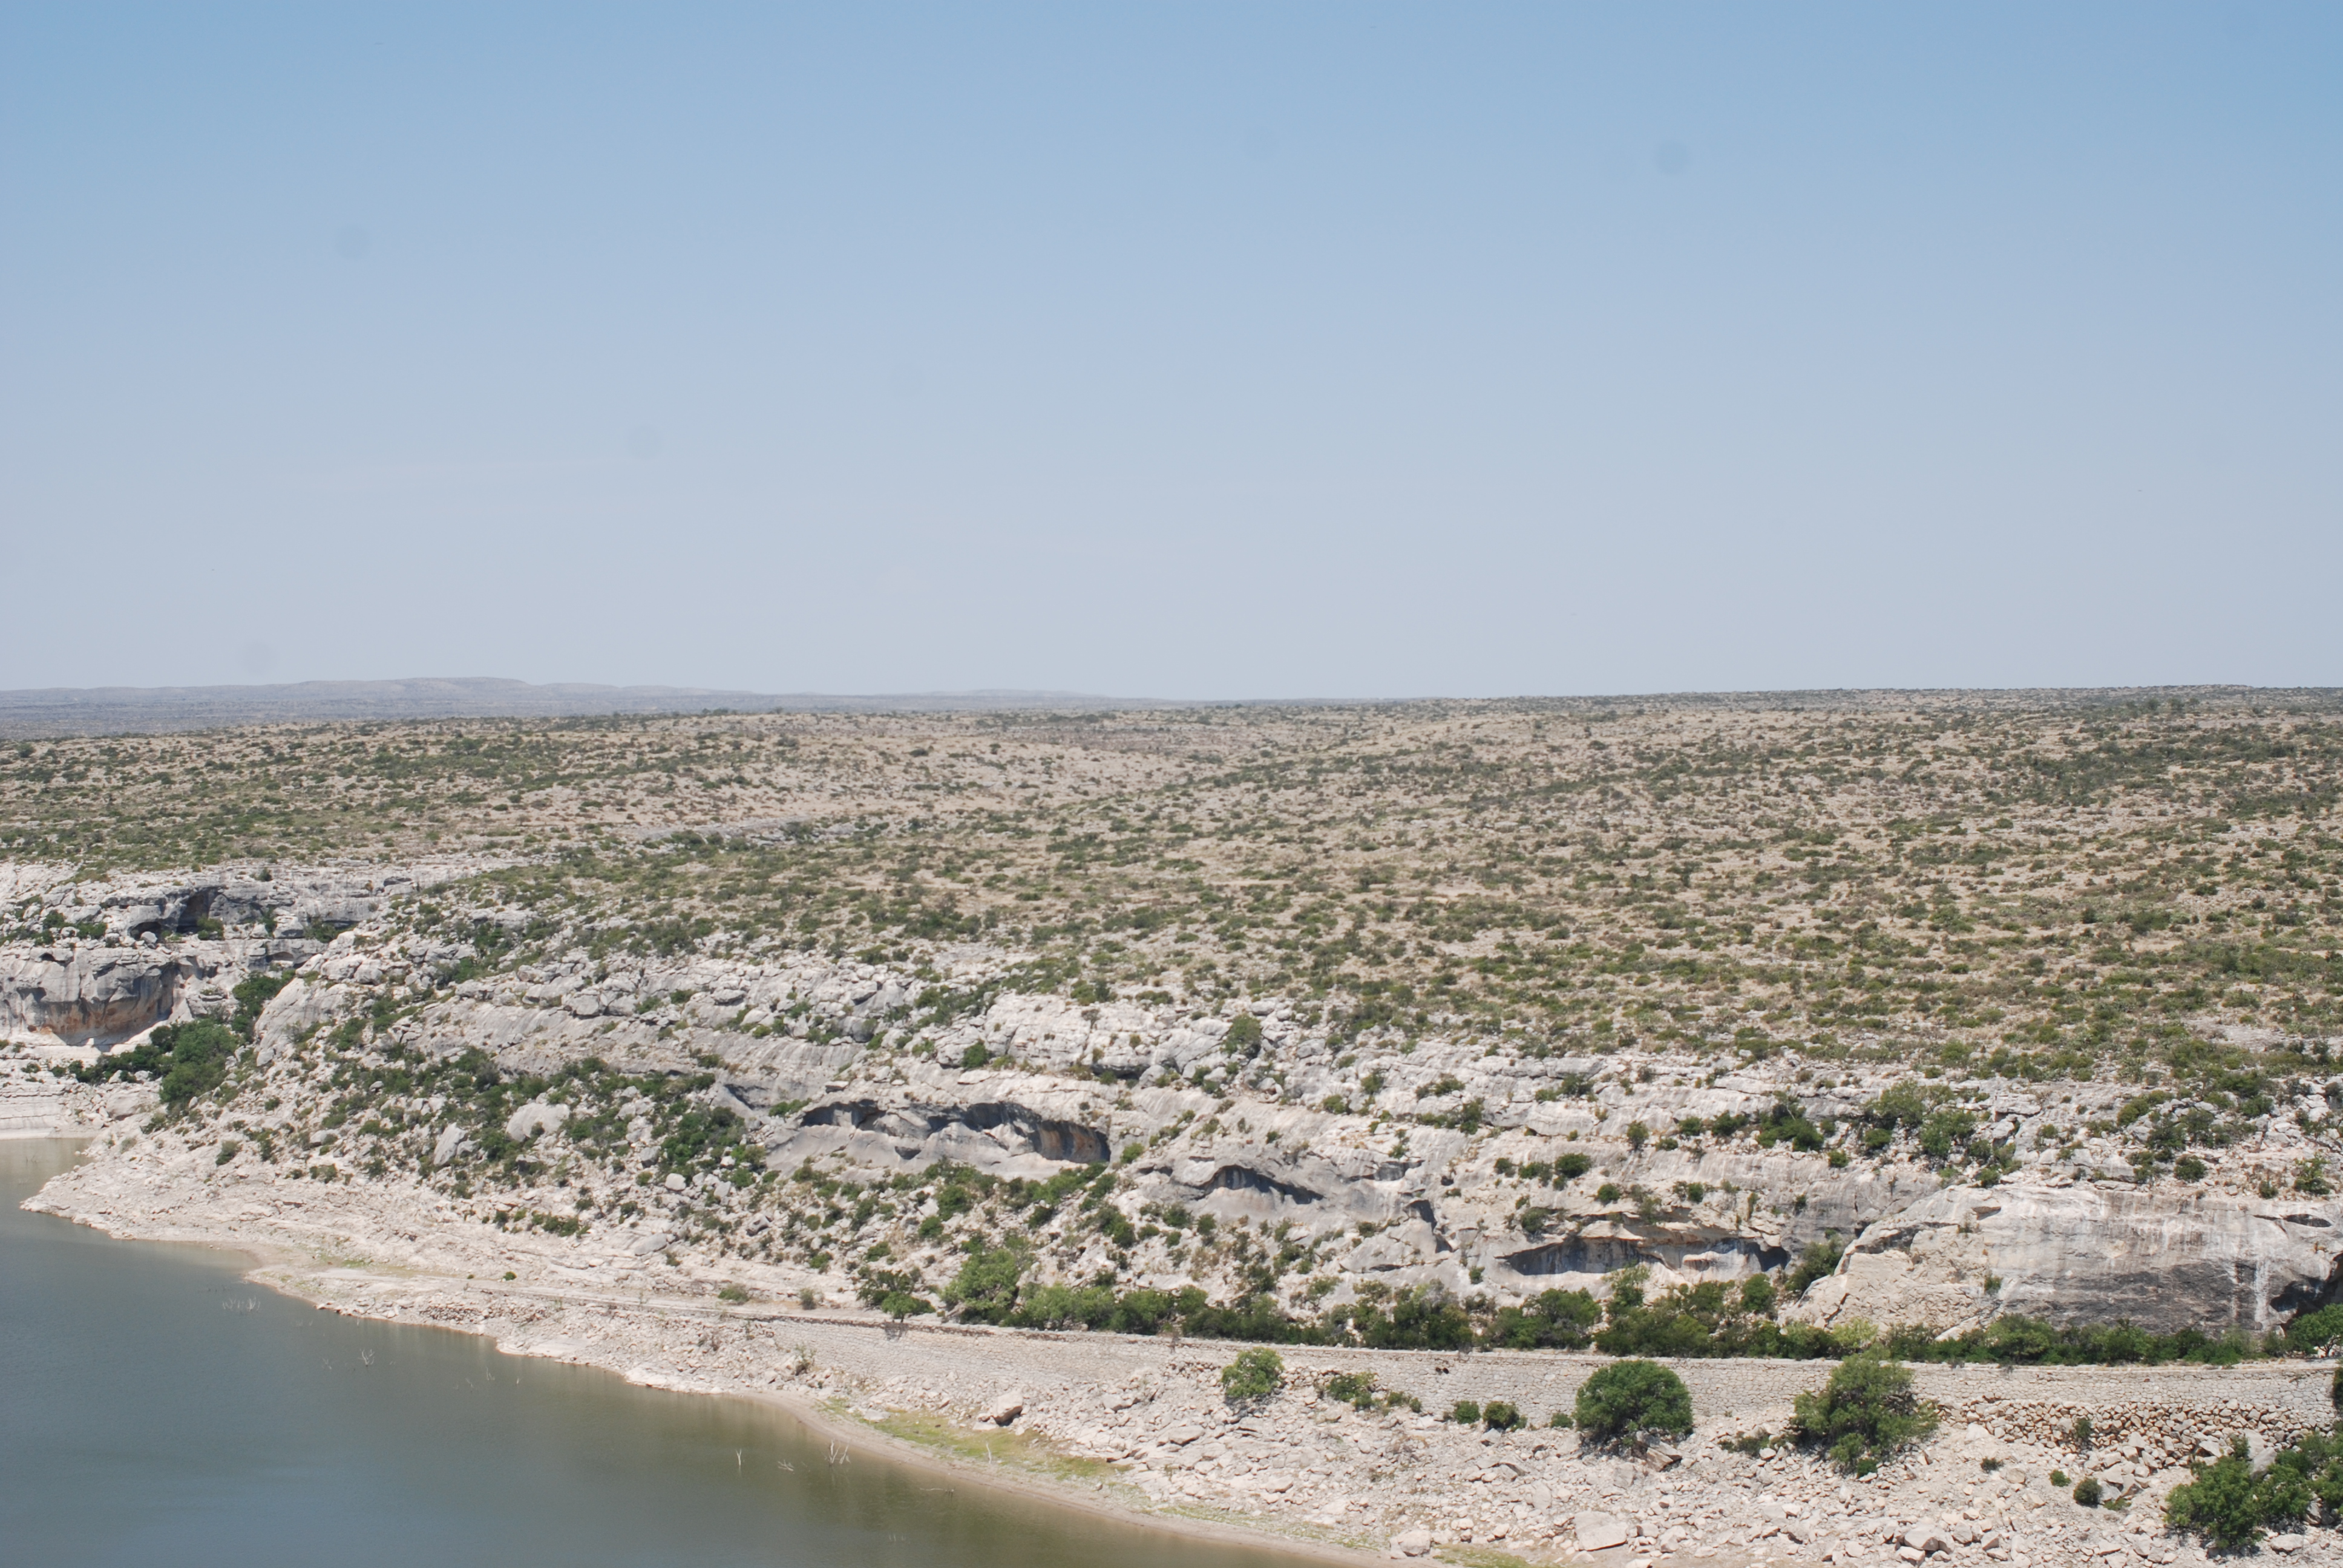 Pecos River and endless desert